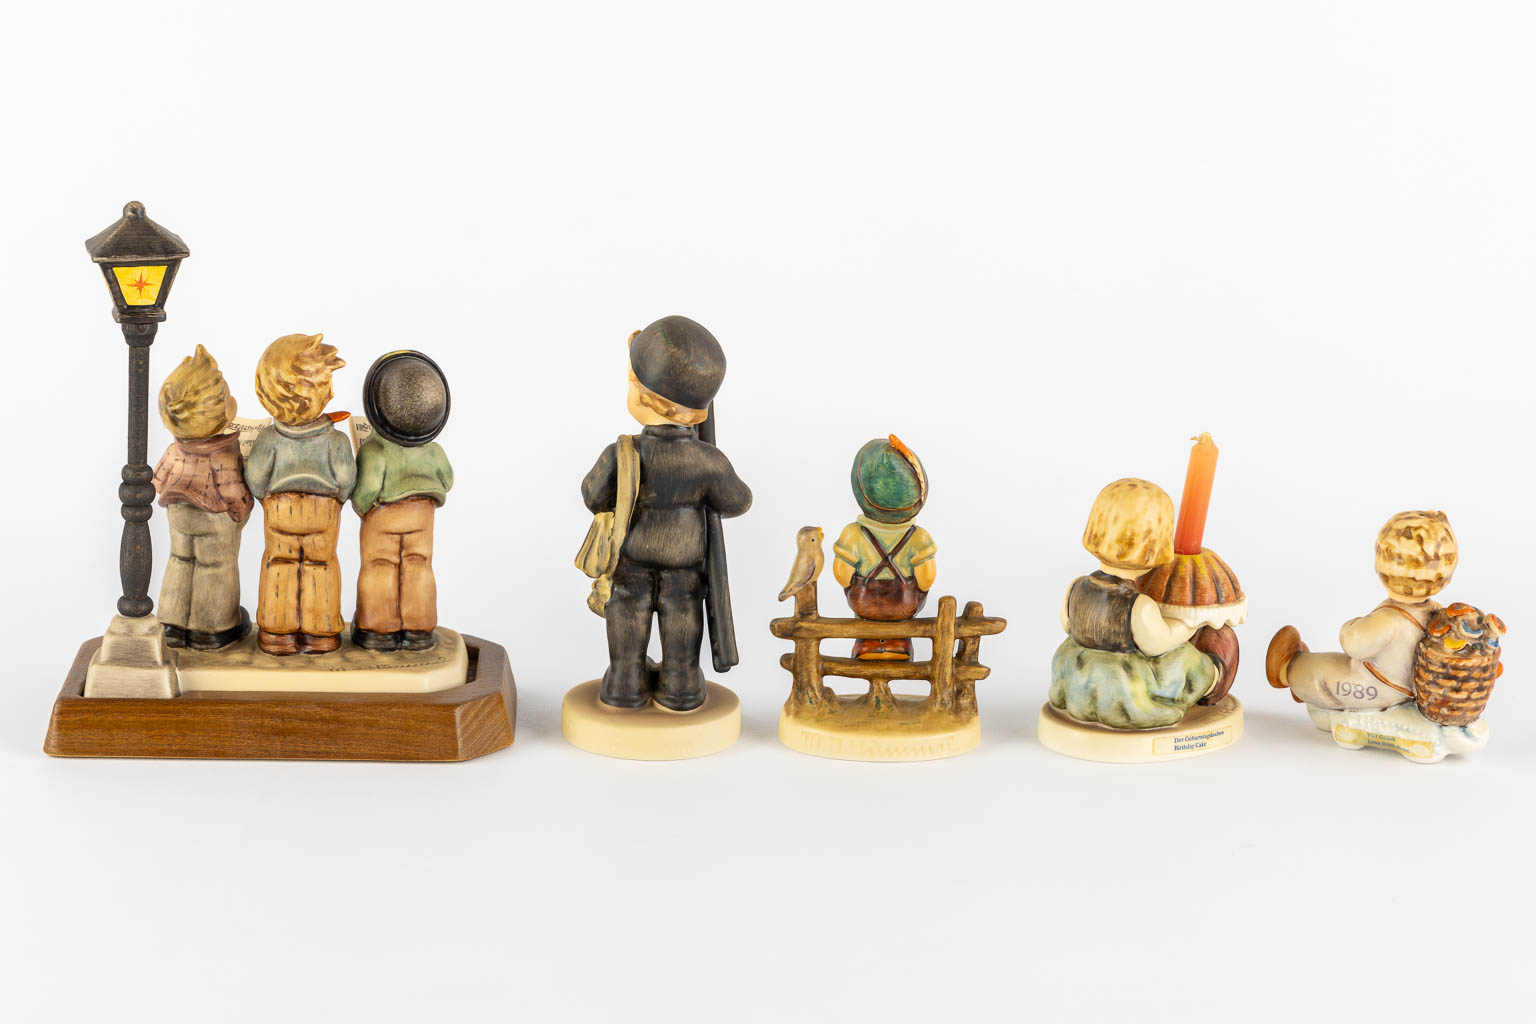 Hummel, 20 figurines, polychrome porcelain. (H:18 cm)